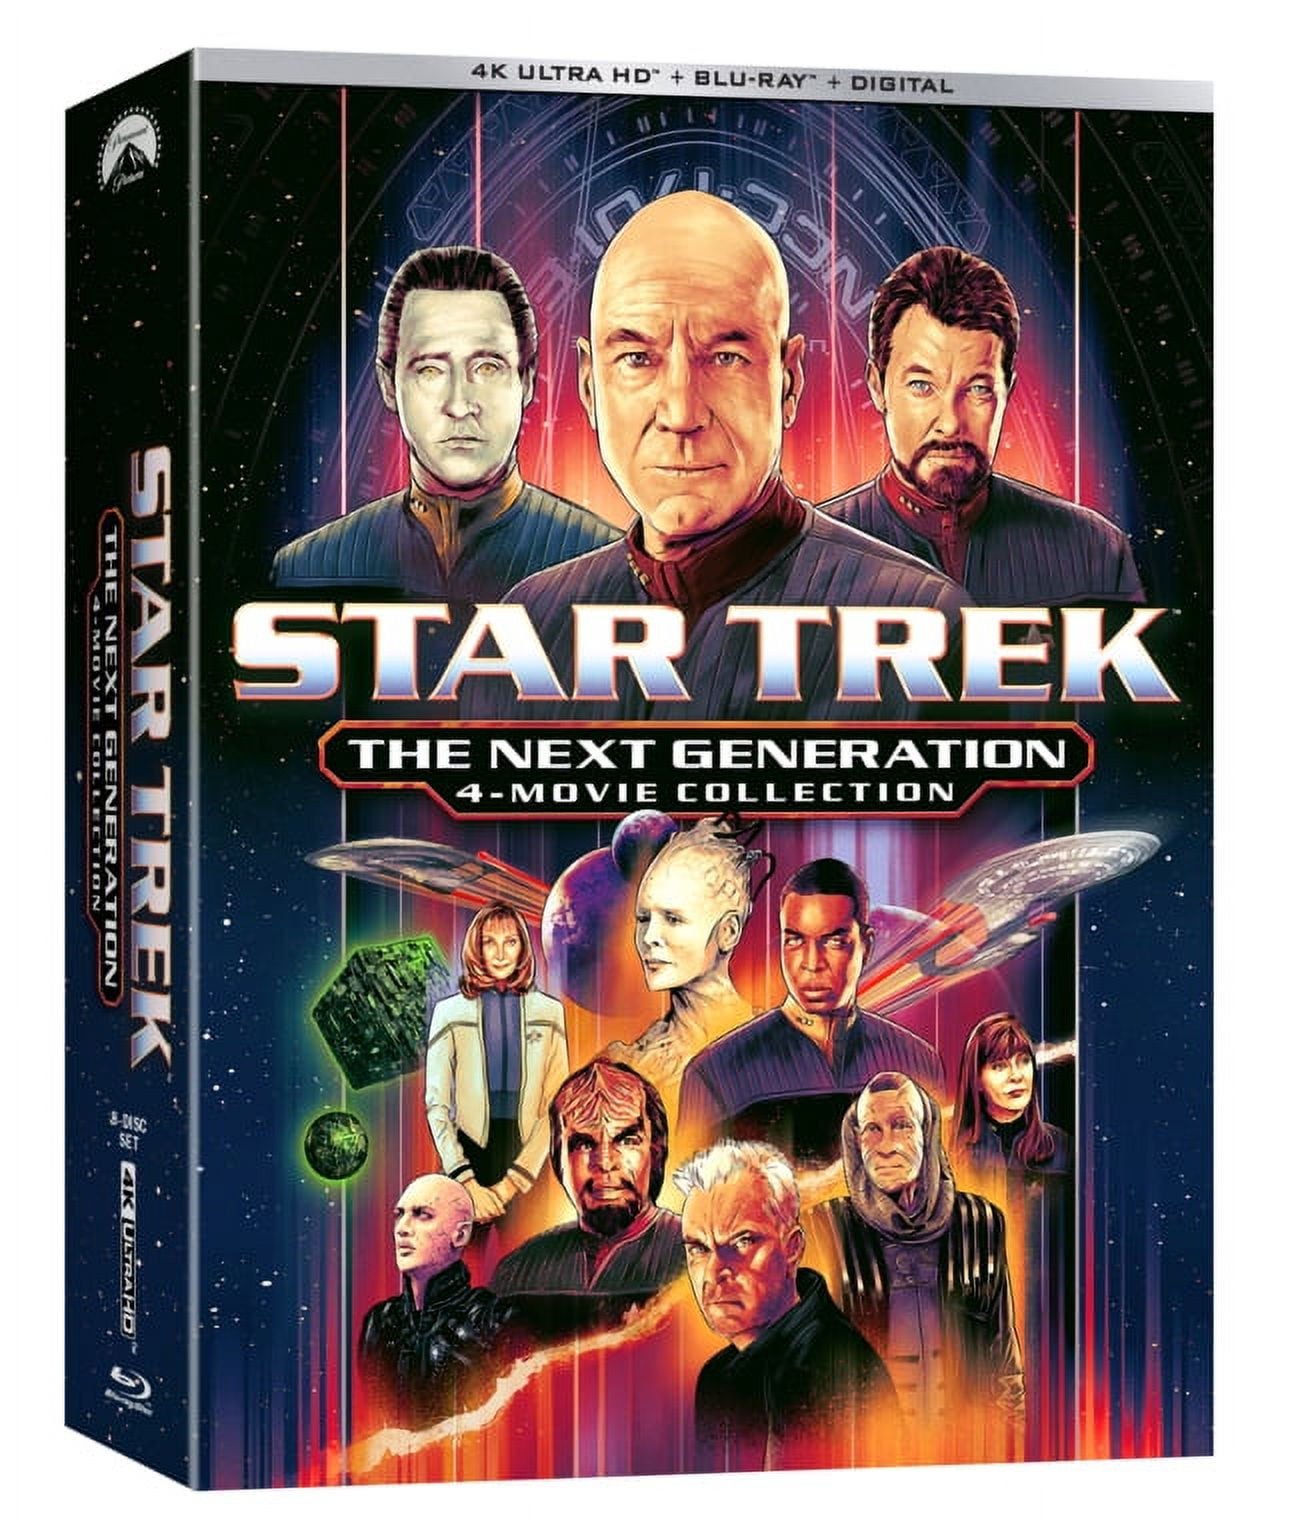 Star Trek: The Motion Picture (4K Ultra HD + Blu-ray + Digital